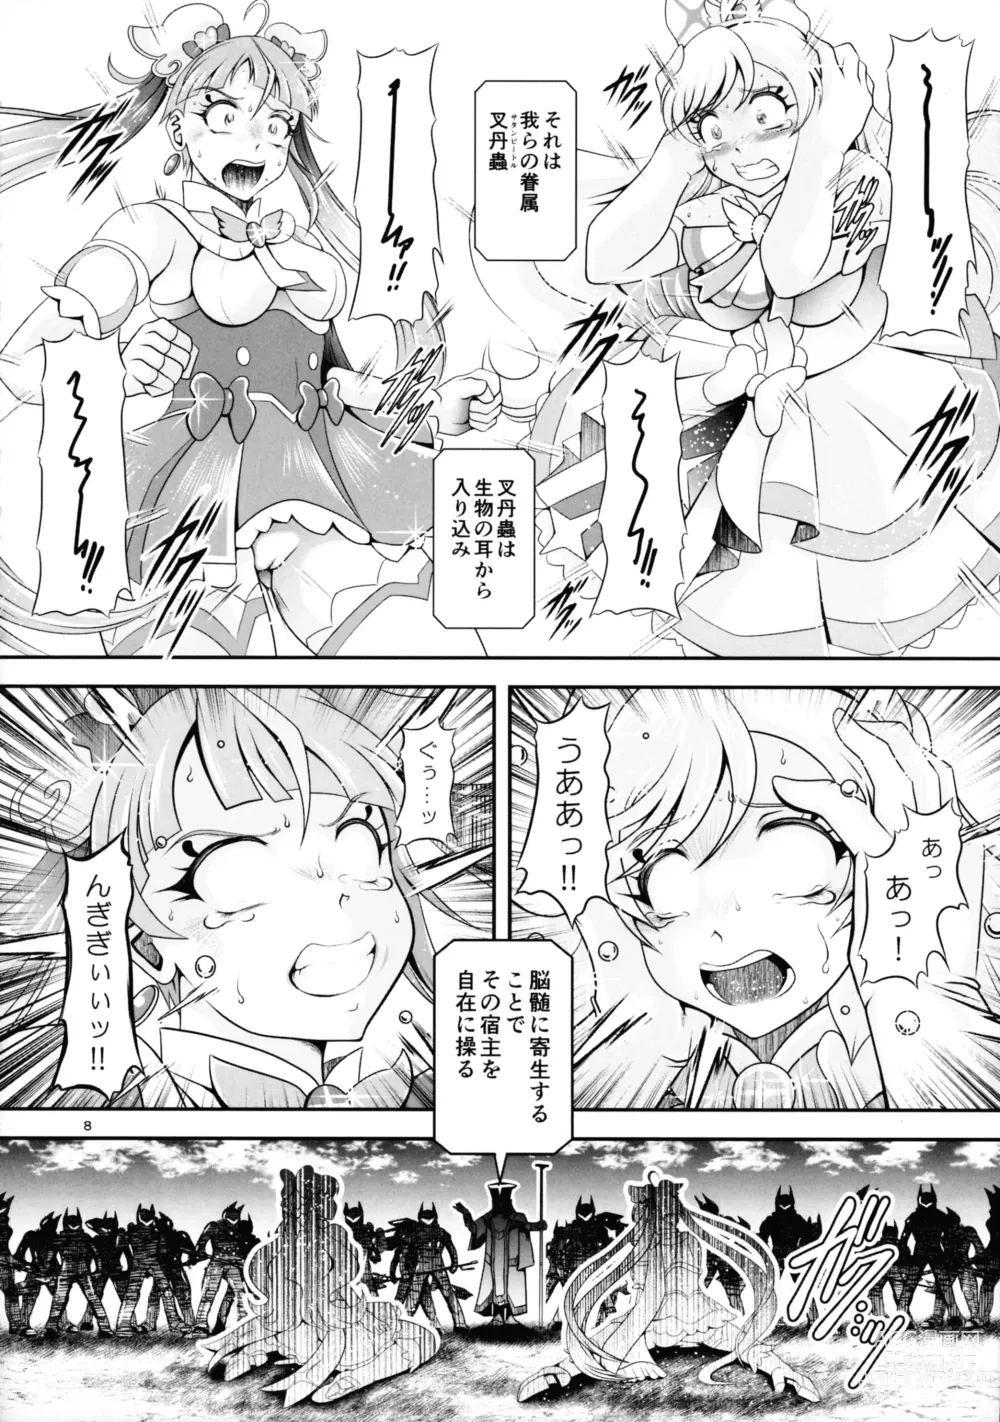 Page 8 of doujinshi Soukyuu BRANDNEW SKY